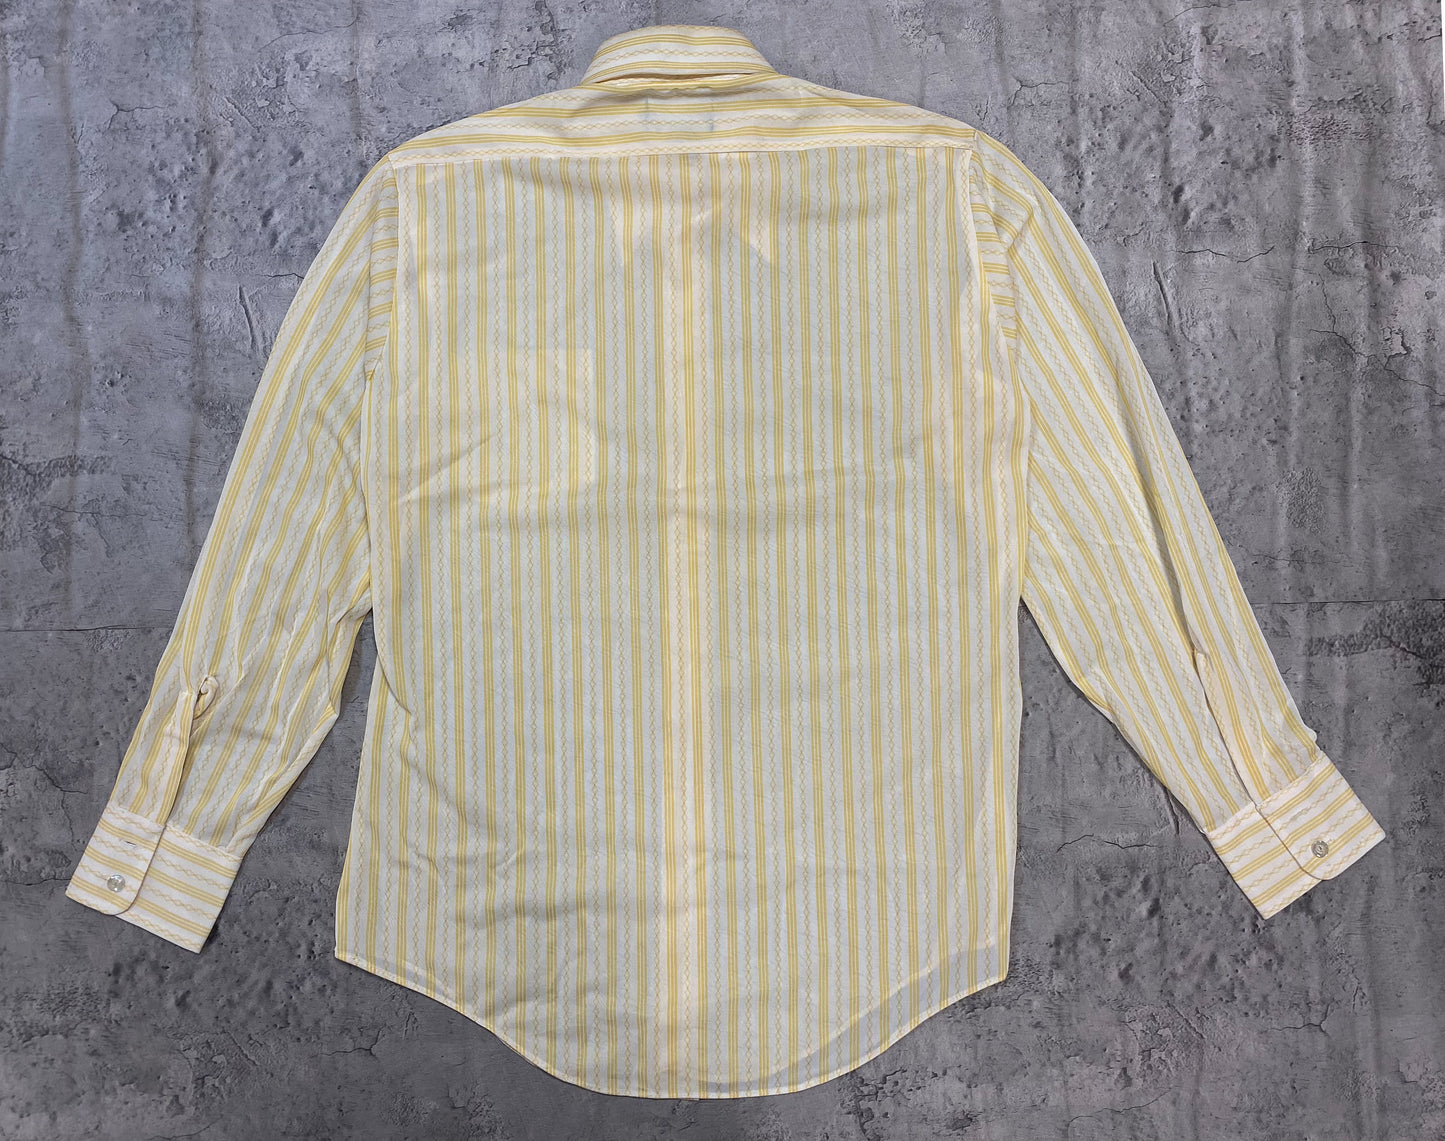 Sears Stripe Shirt vintage 70s